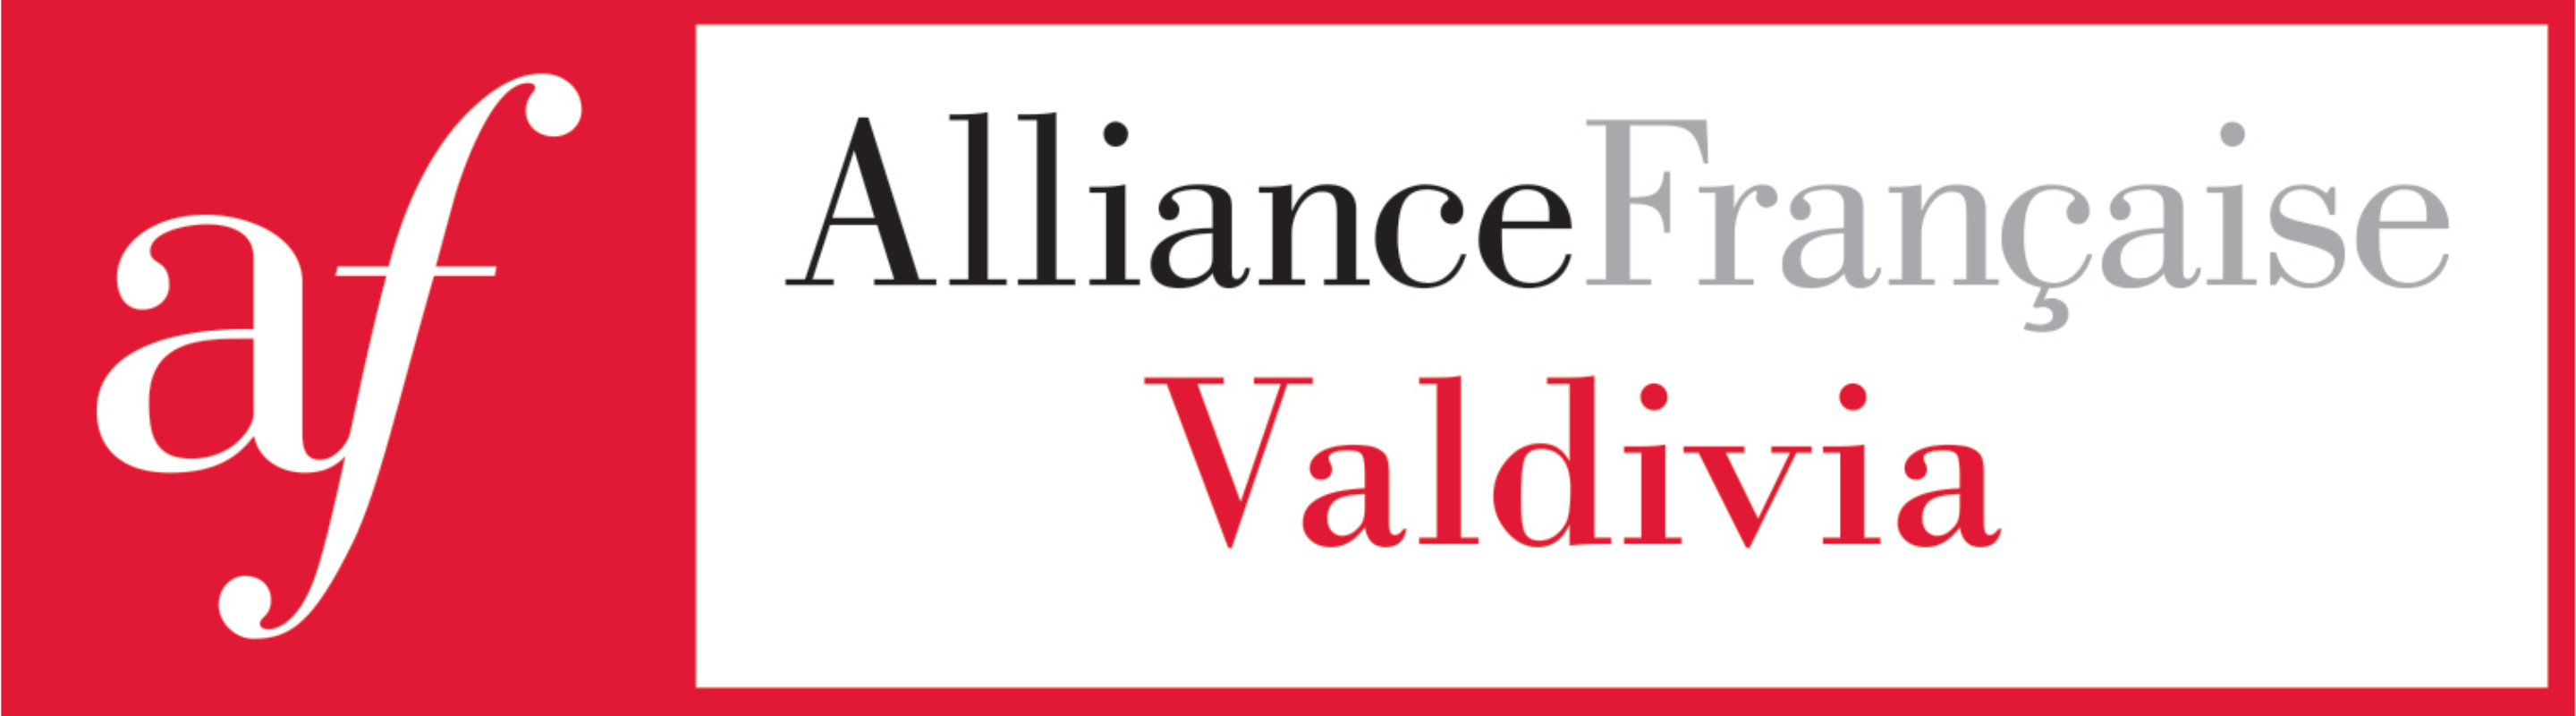 Alliance Française Valdivia